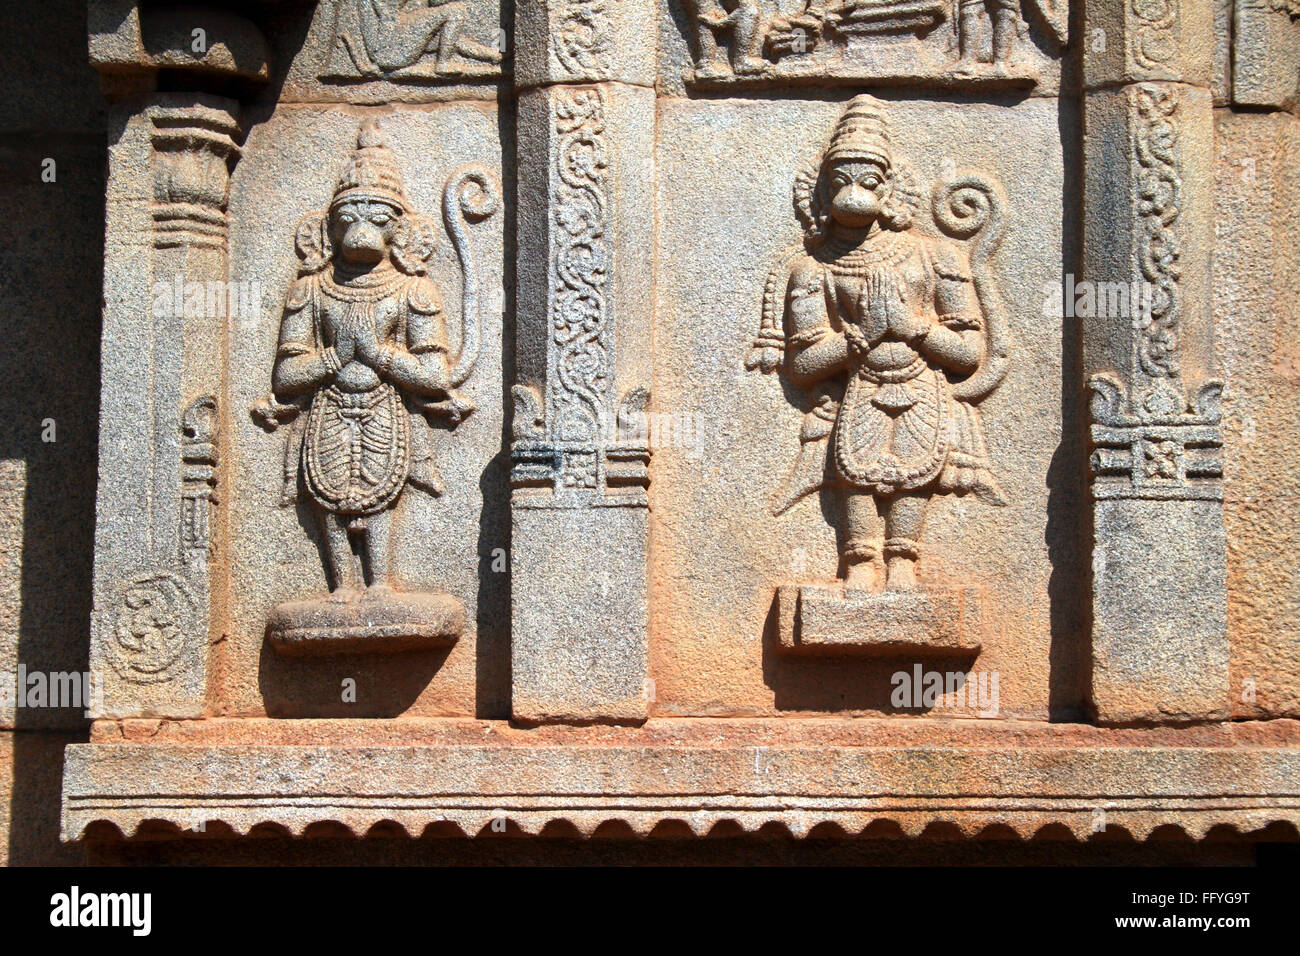 Hindu God Sri Rama Temple Wall Panel Statue Ram Maha Vishnu Avatar Sculpture Old 